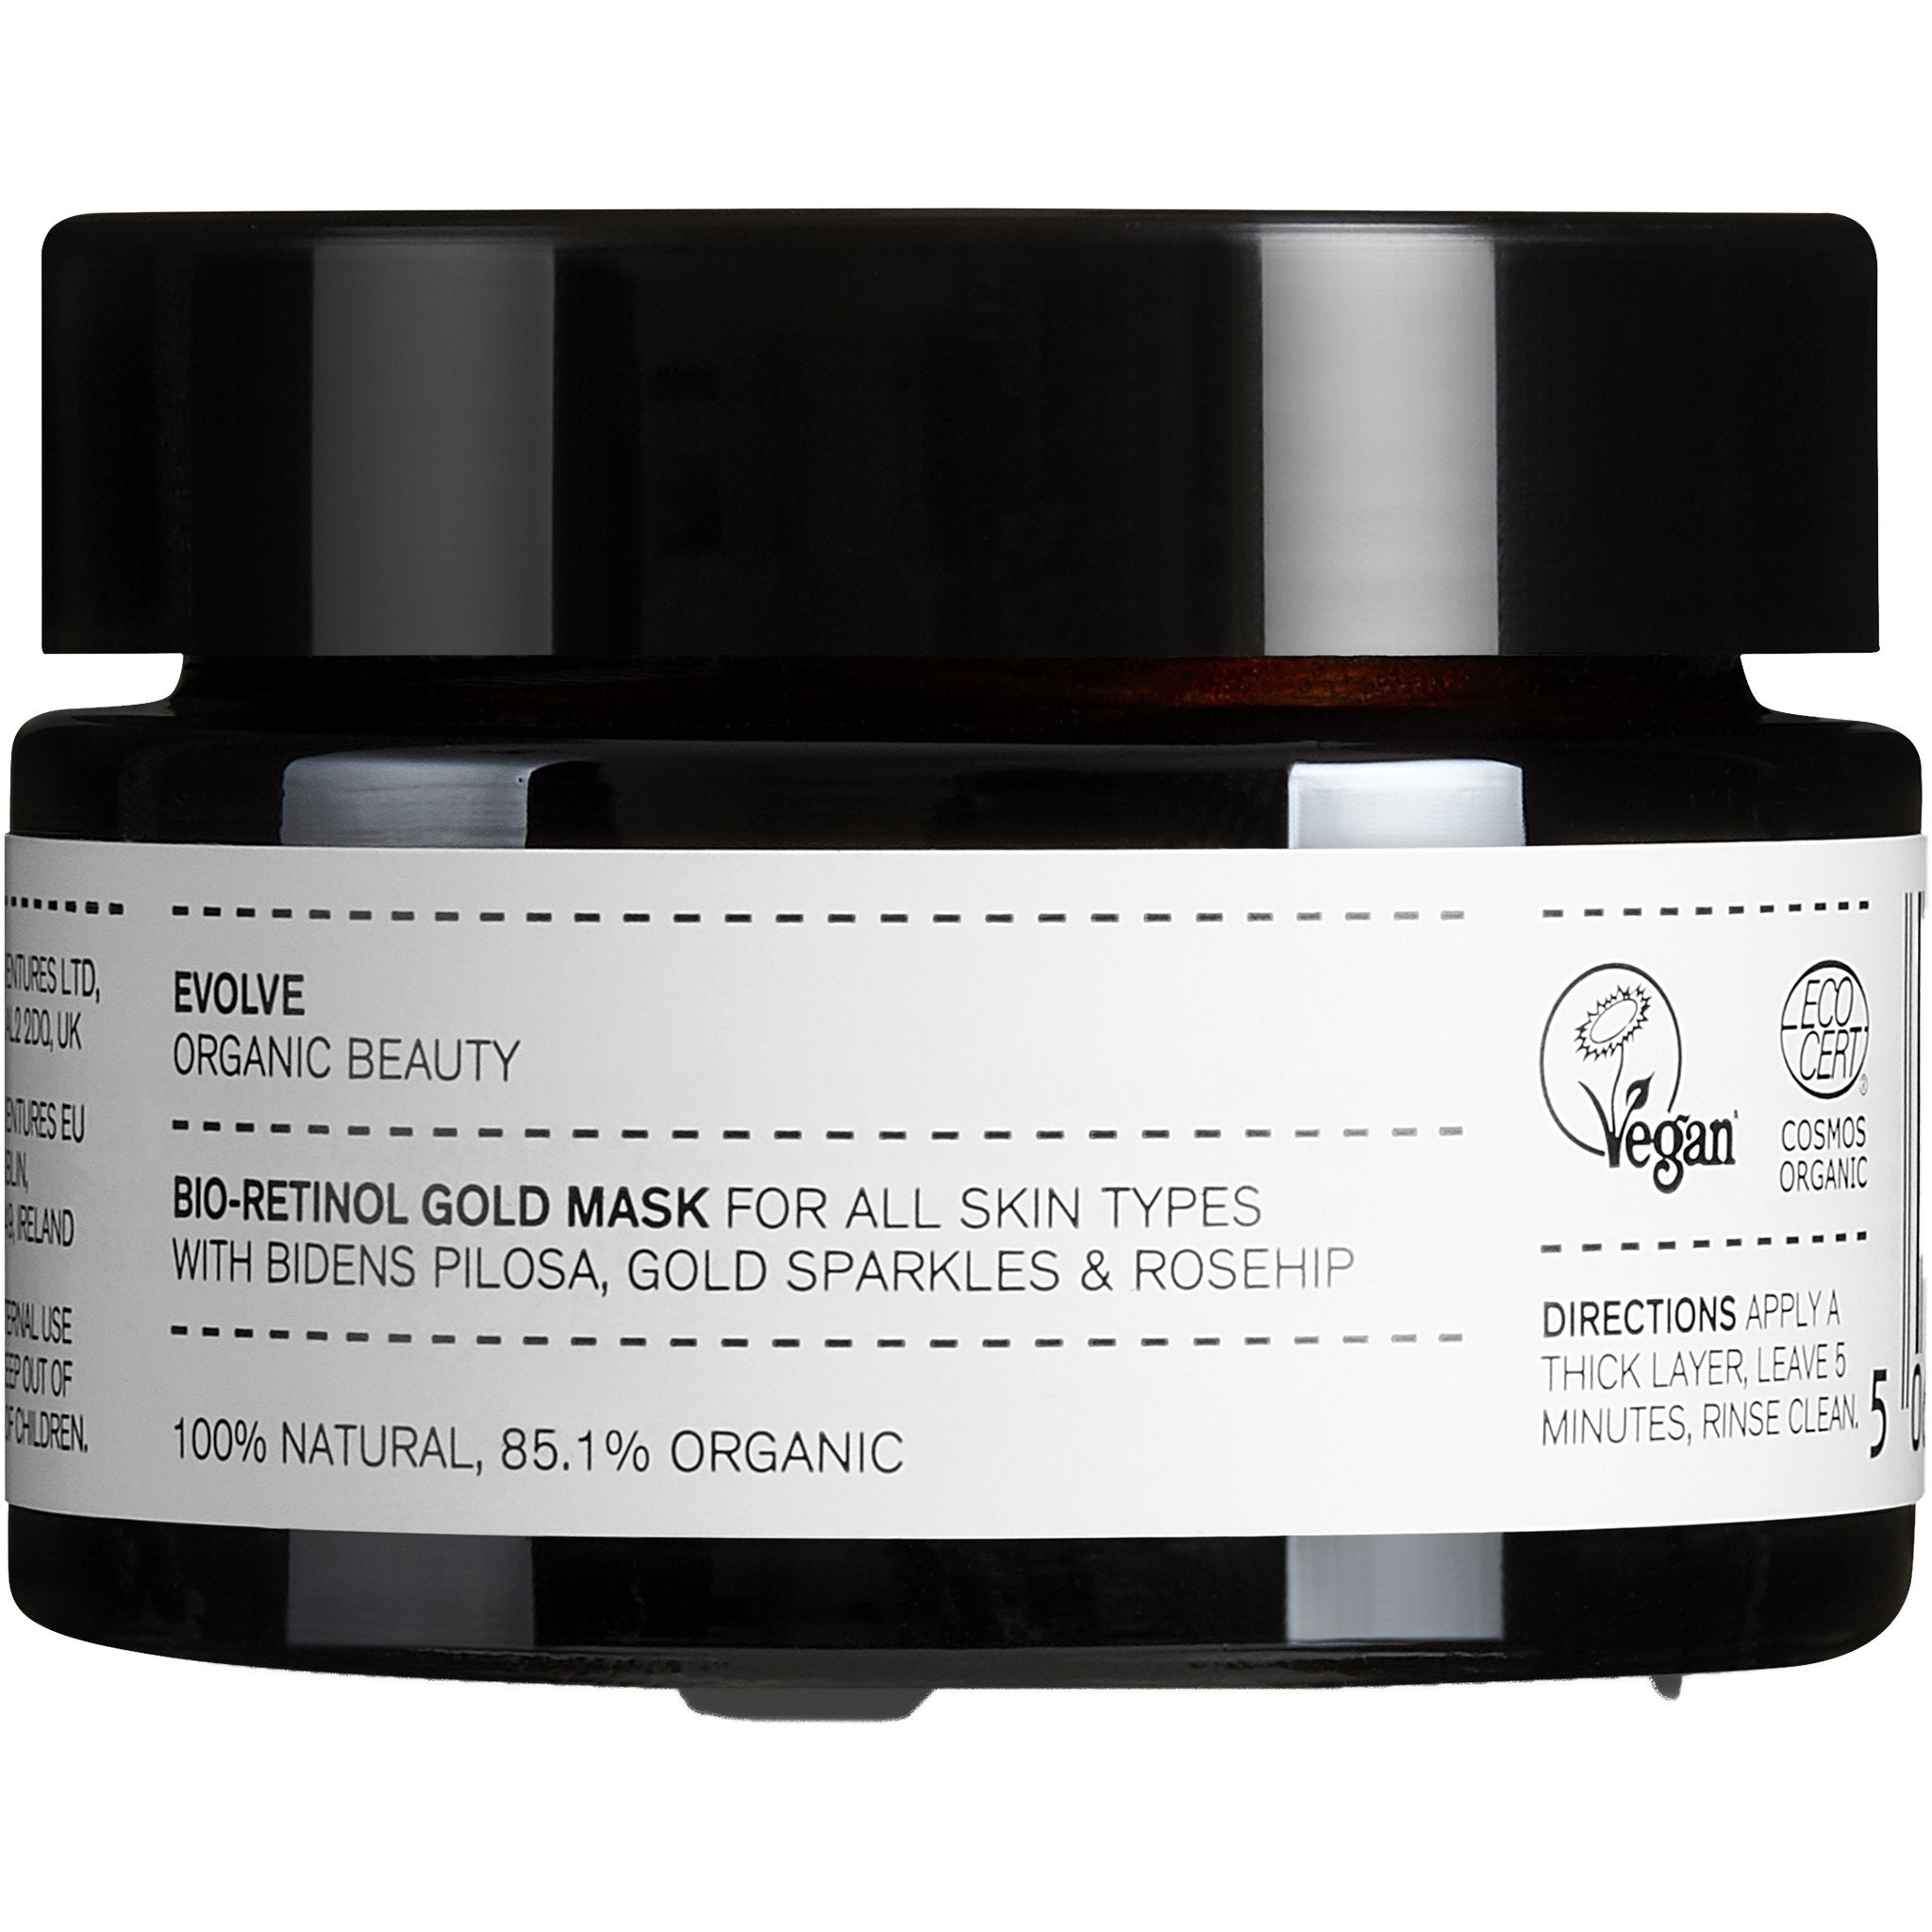 -Bio-Retinol Gold Mask